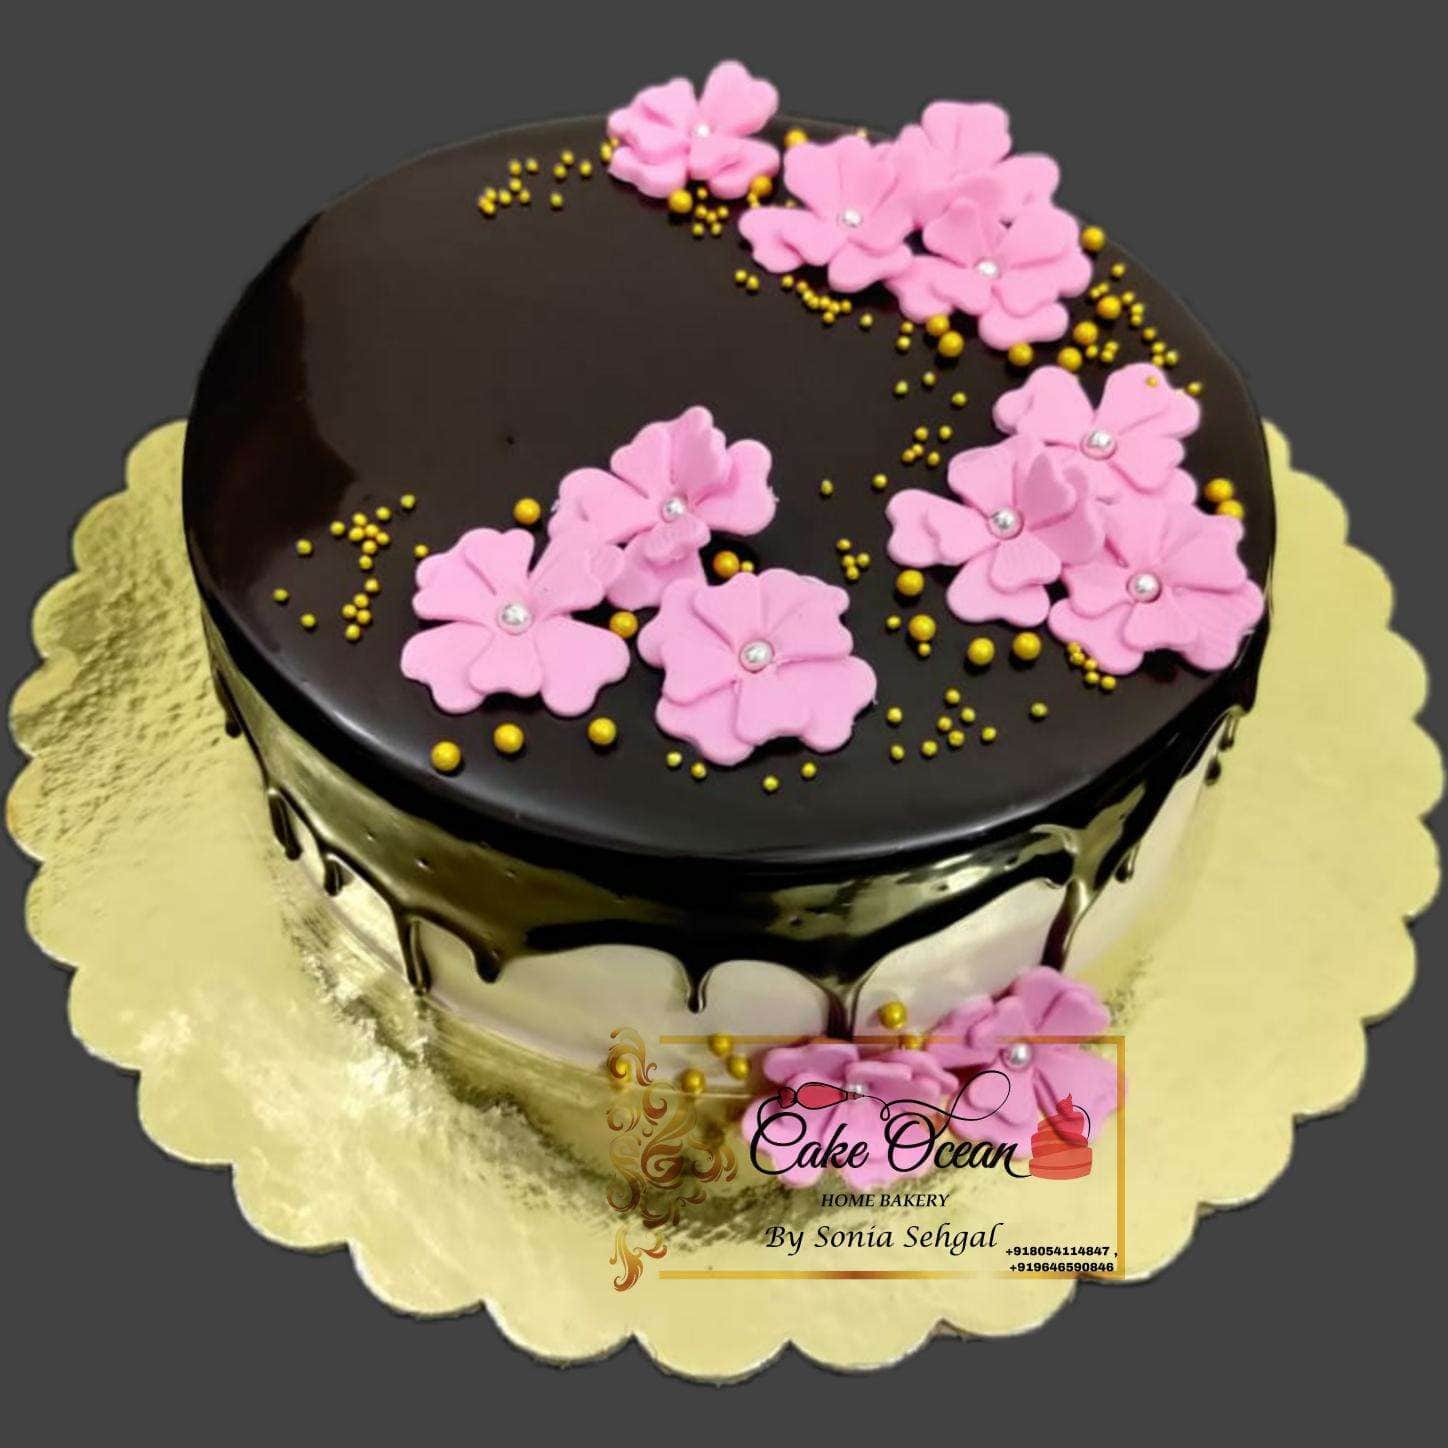 Top 75+ online cake order in amritsar latest - in.daotaonec